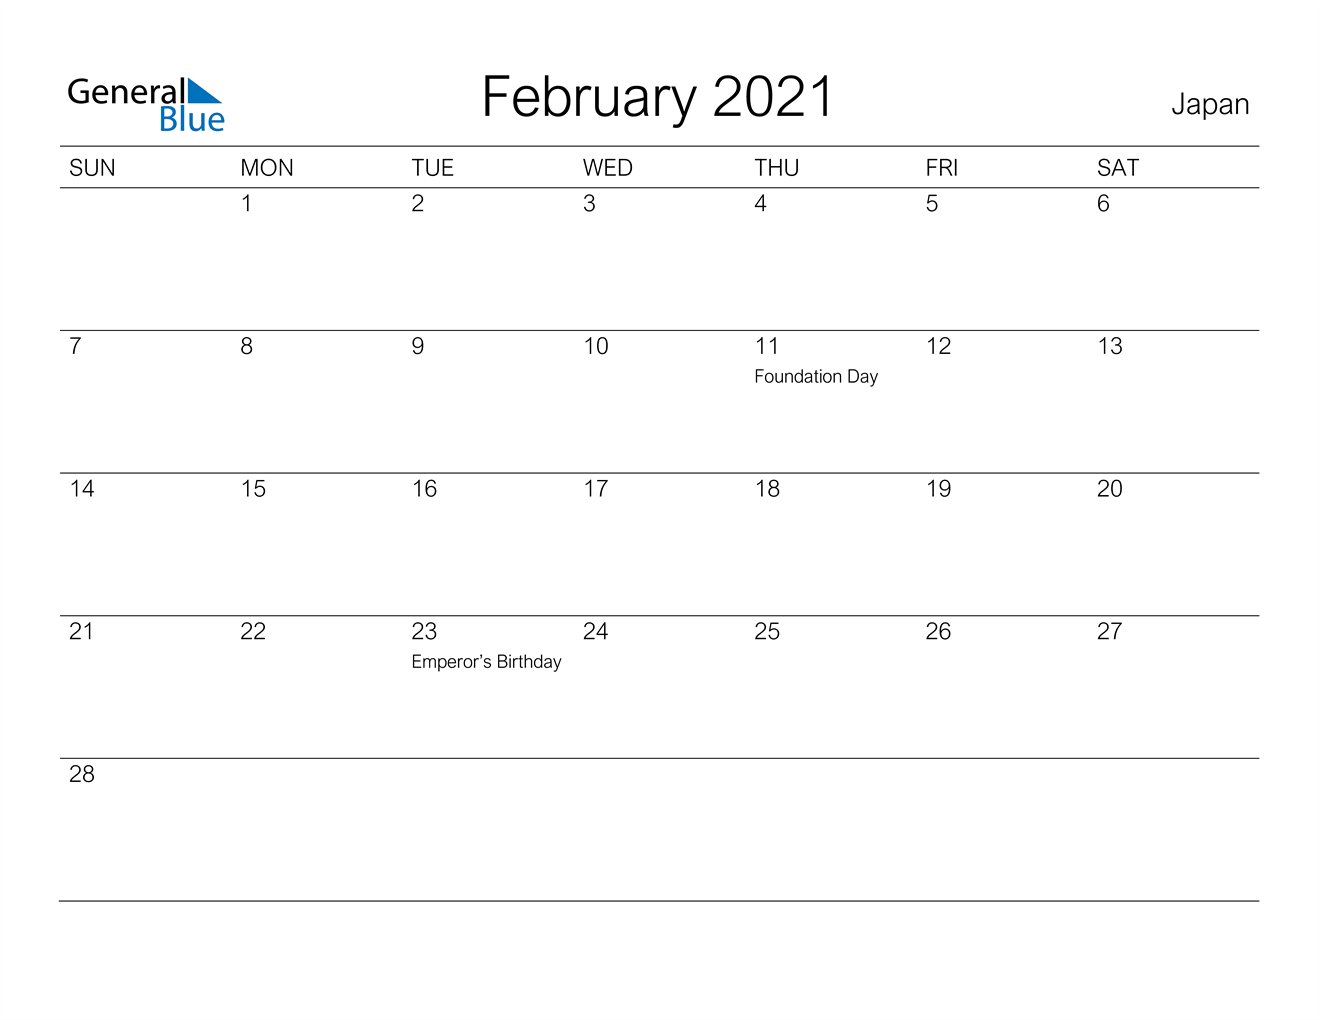 February 2021 Calendar - Japan